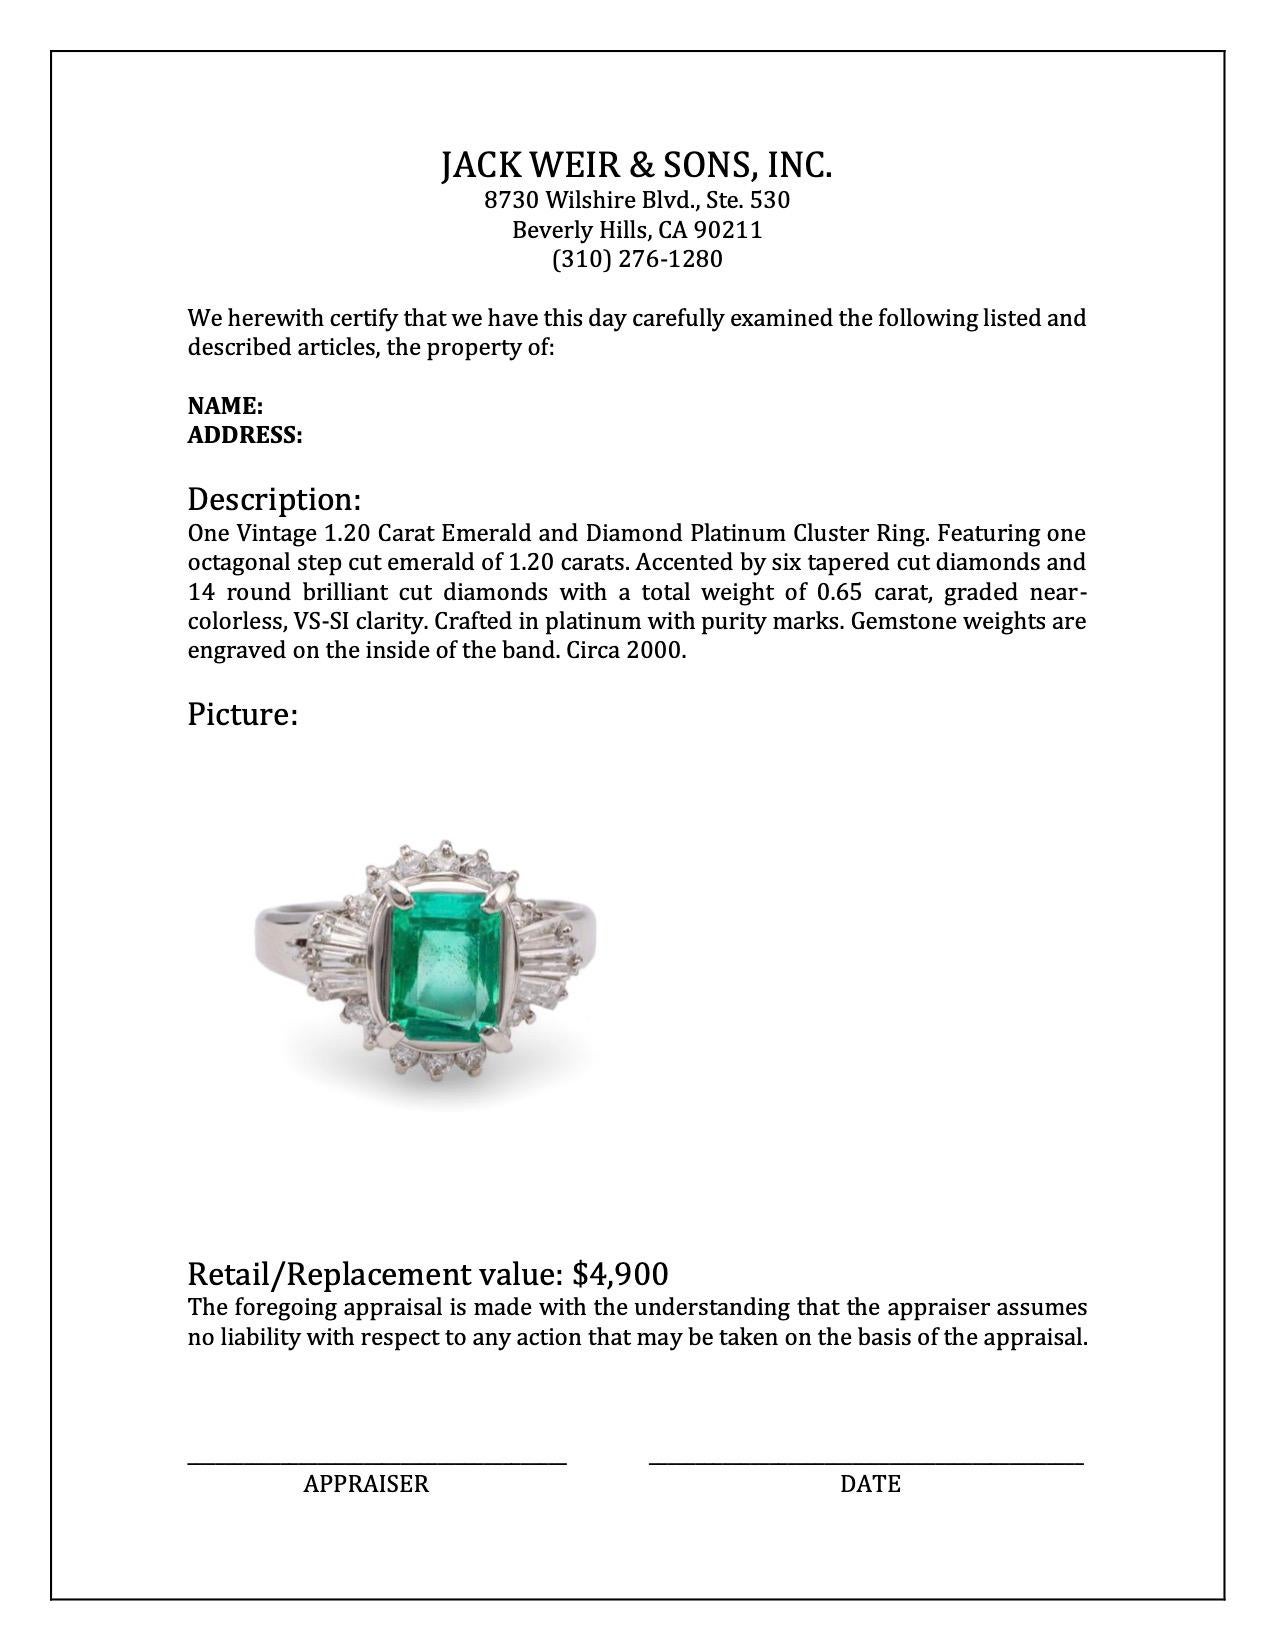 Vintage 1.20 Carat Emerald and Diamond Platinum Cluster Ring 1